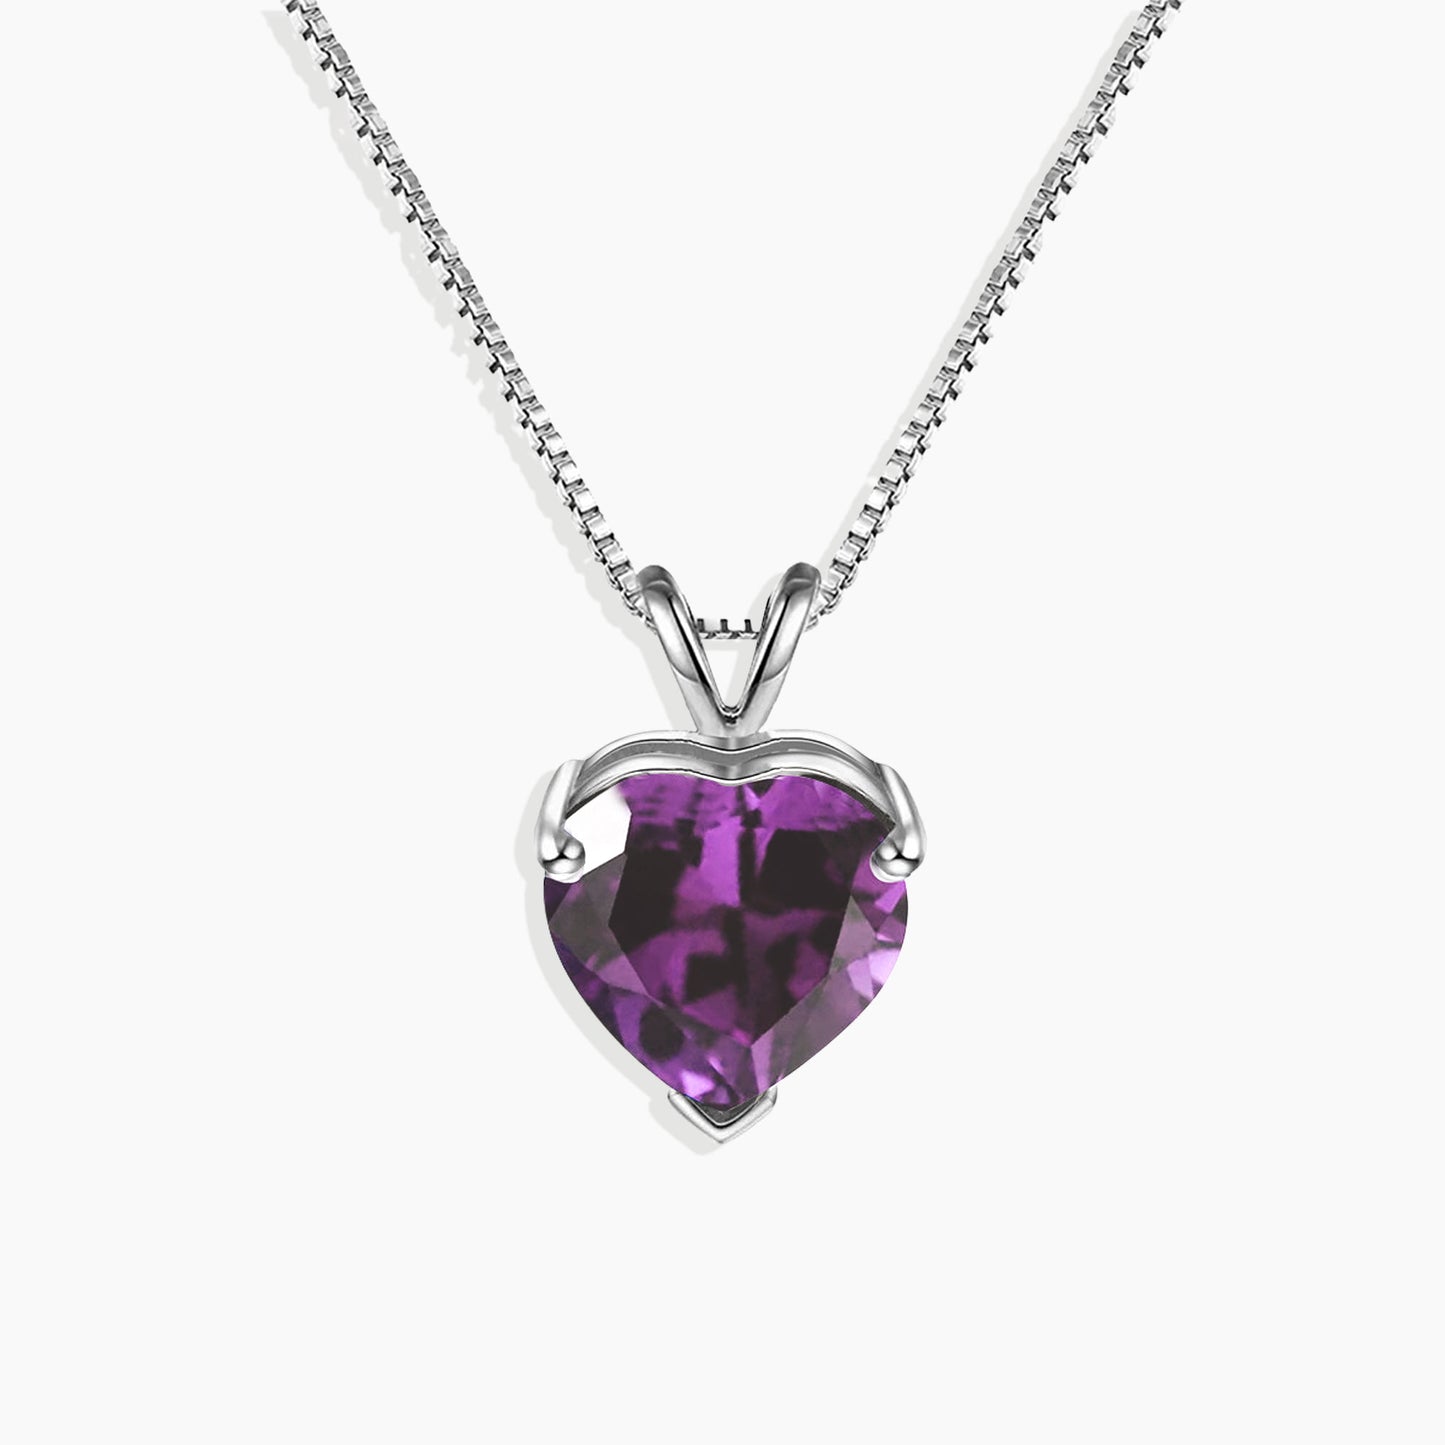 Heart Shaped Gemstone Necklace in Sterling Silver -  Amethyst